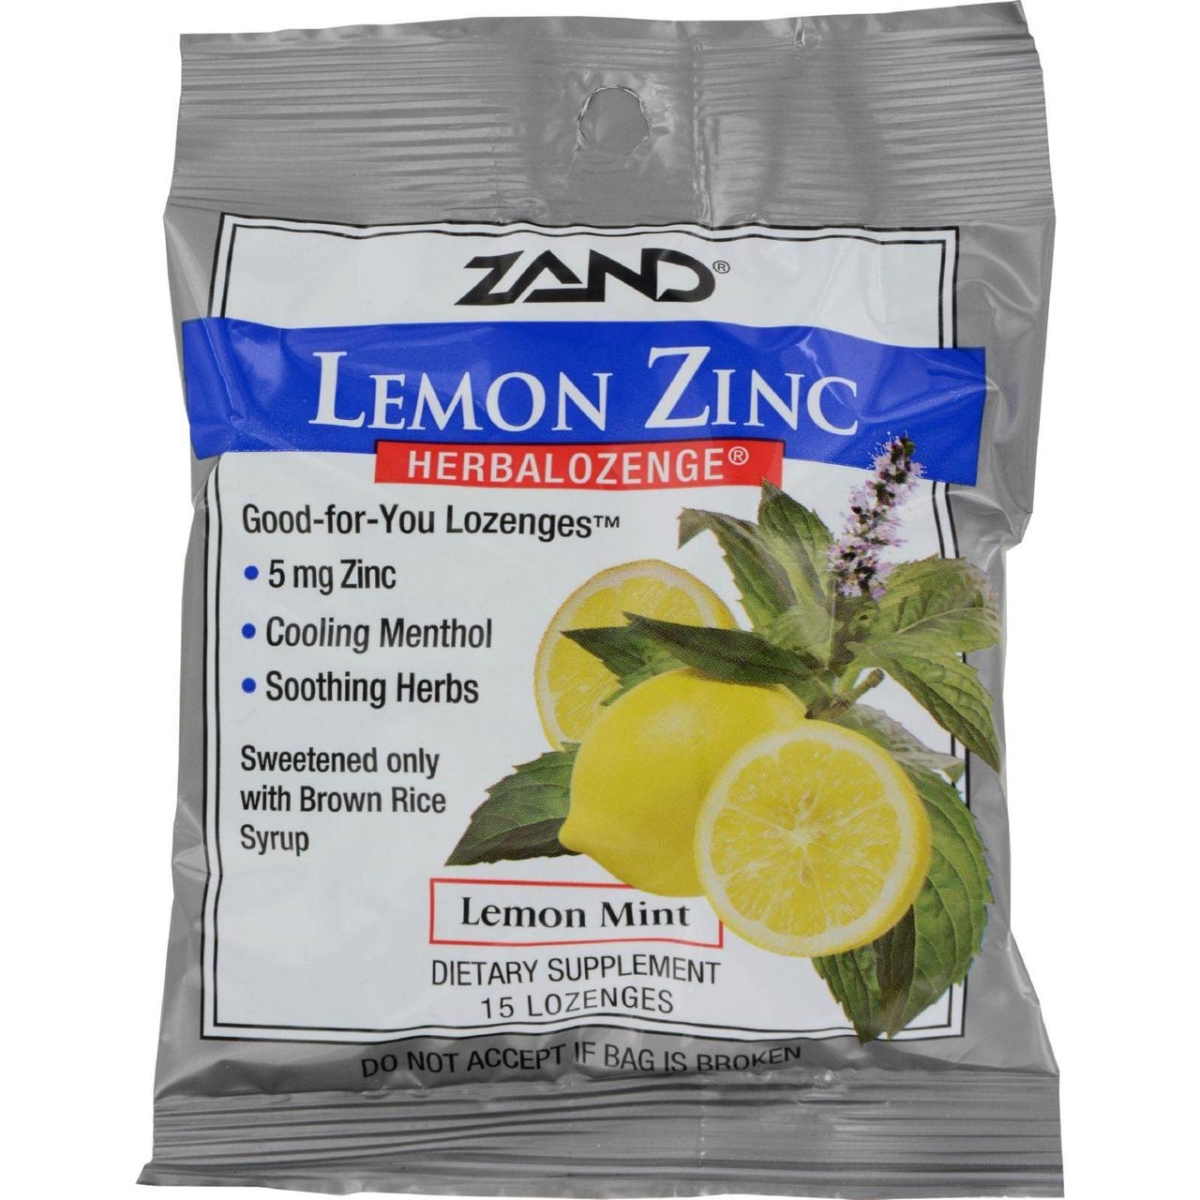 Hg0978262 Herbalozenge Lemon Zinc Lemon, 15 Lozenges - Case Of 12